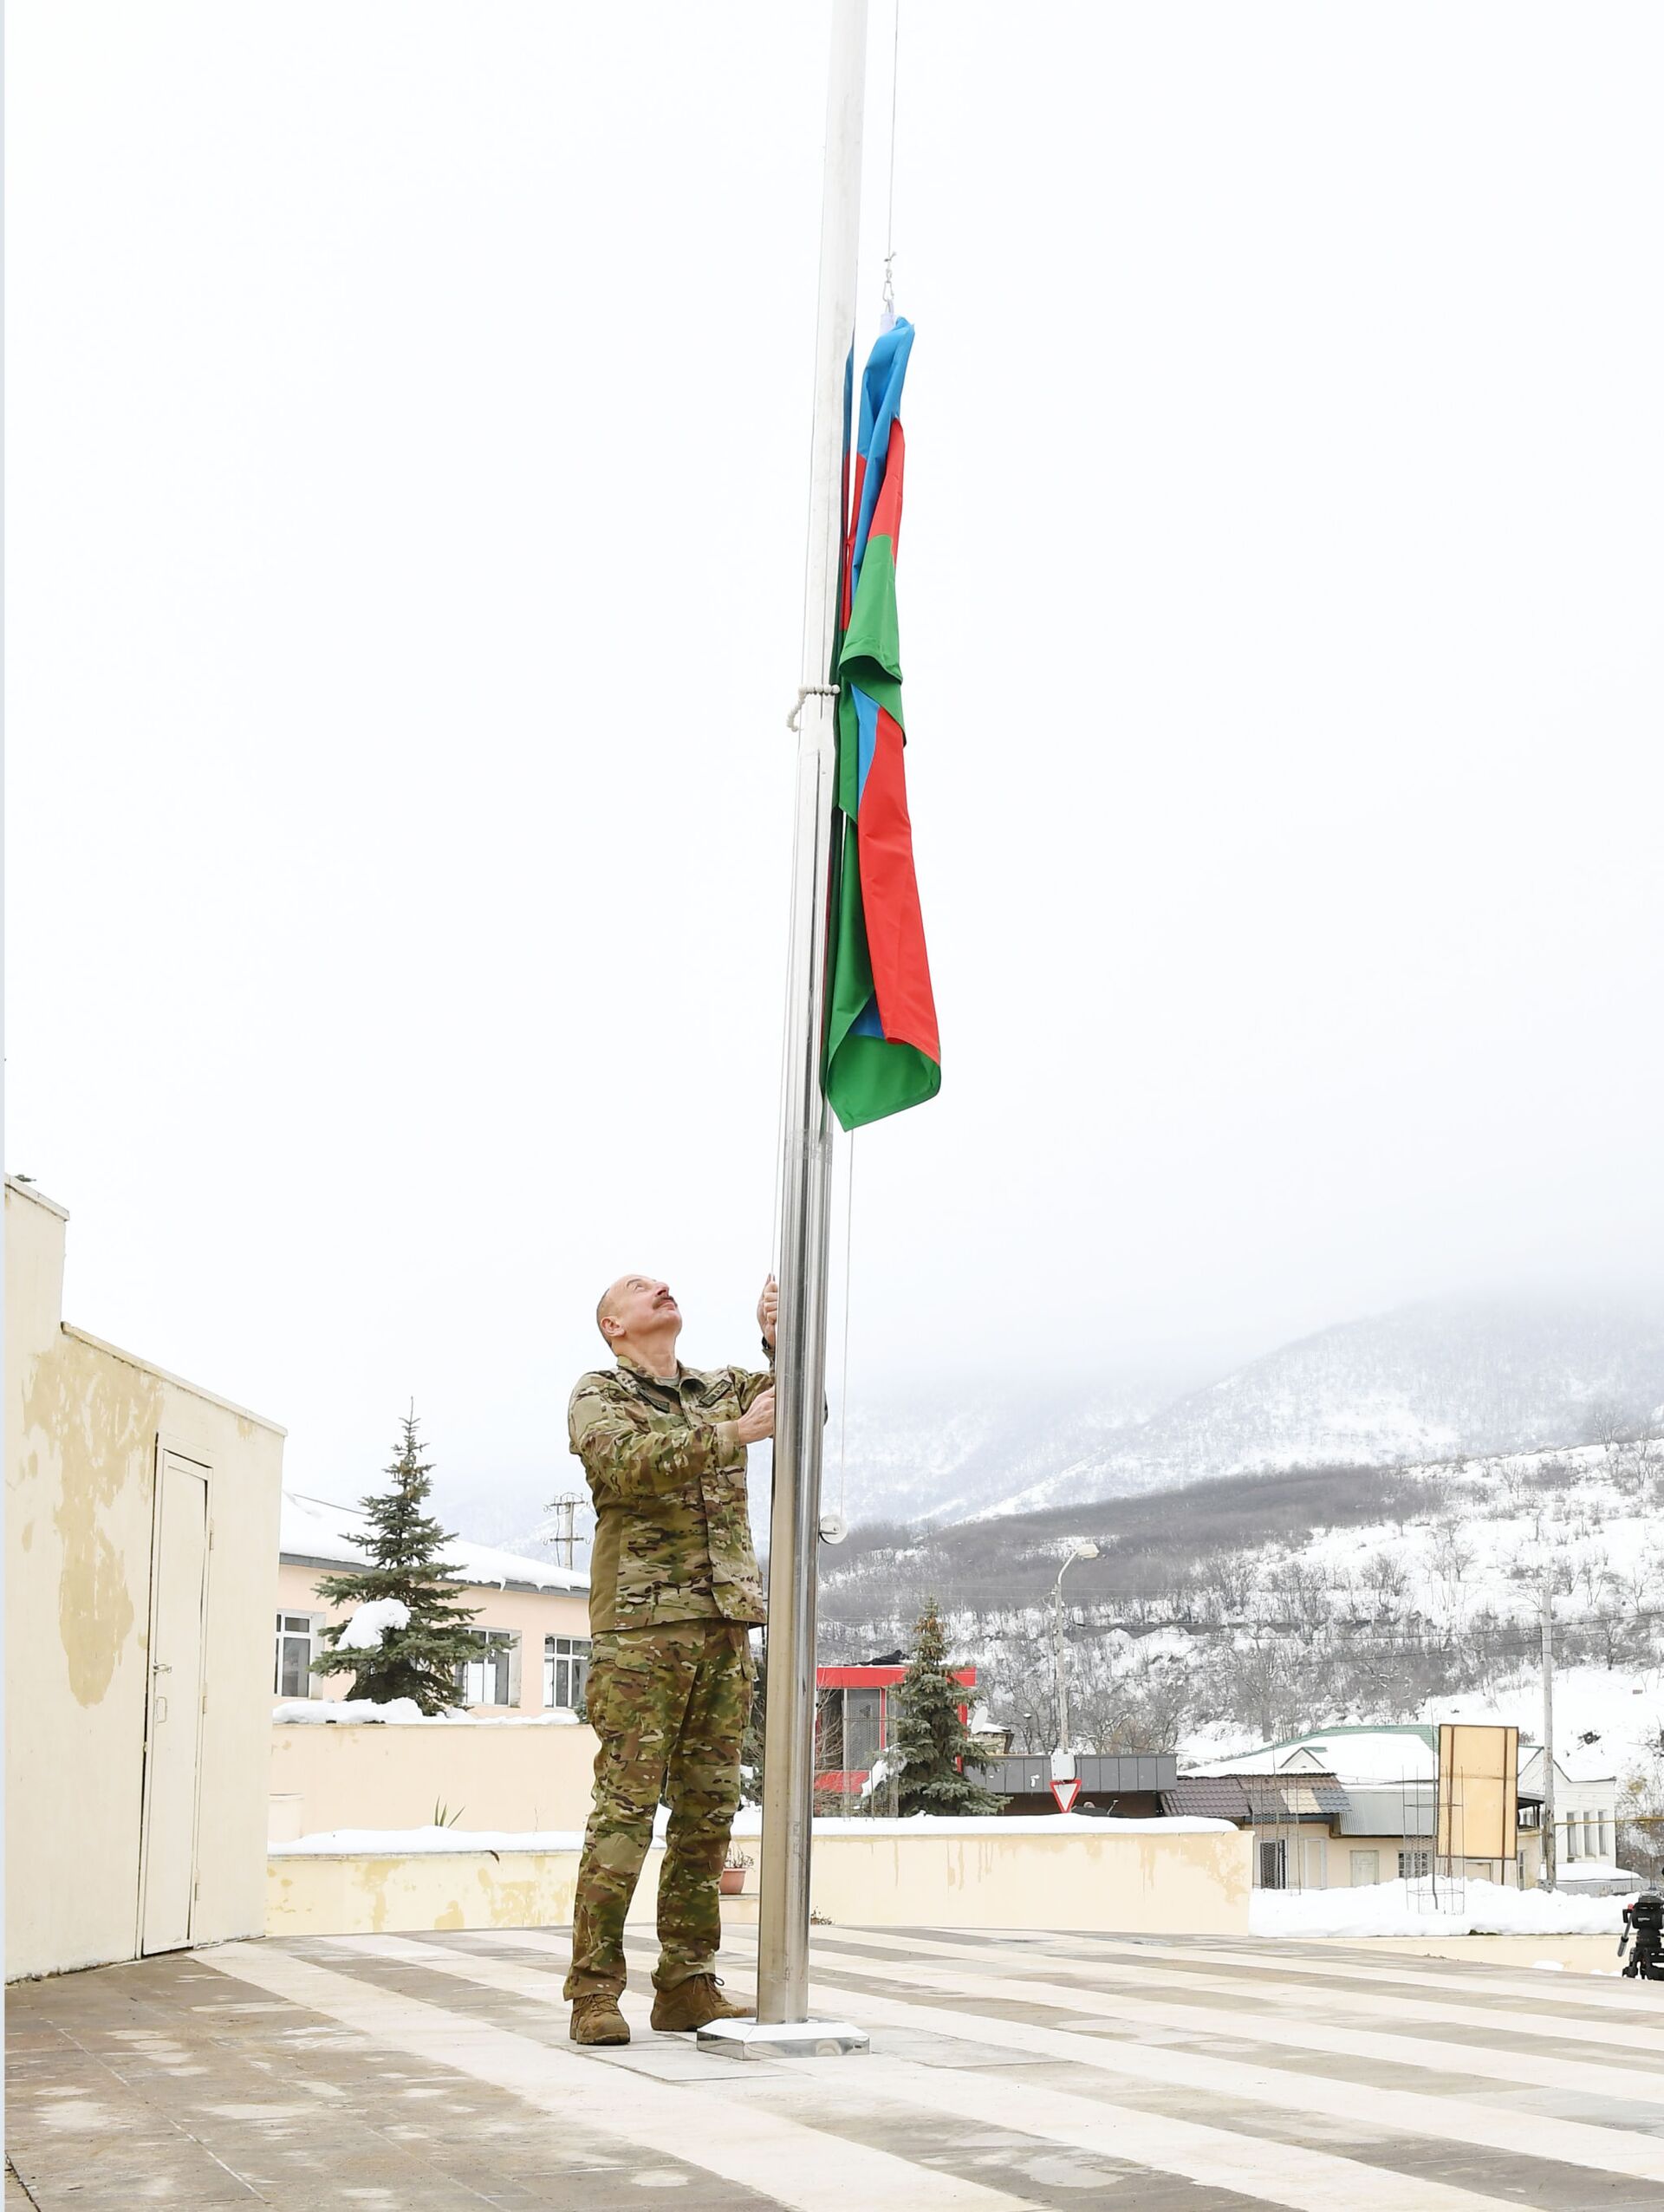 Президент Ильхам Алиев поднял флаг Азербайджана в Гадруте - фото - Sputnik Азербайджан, 1920, 16.03.2021